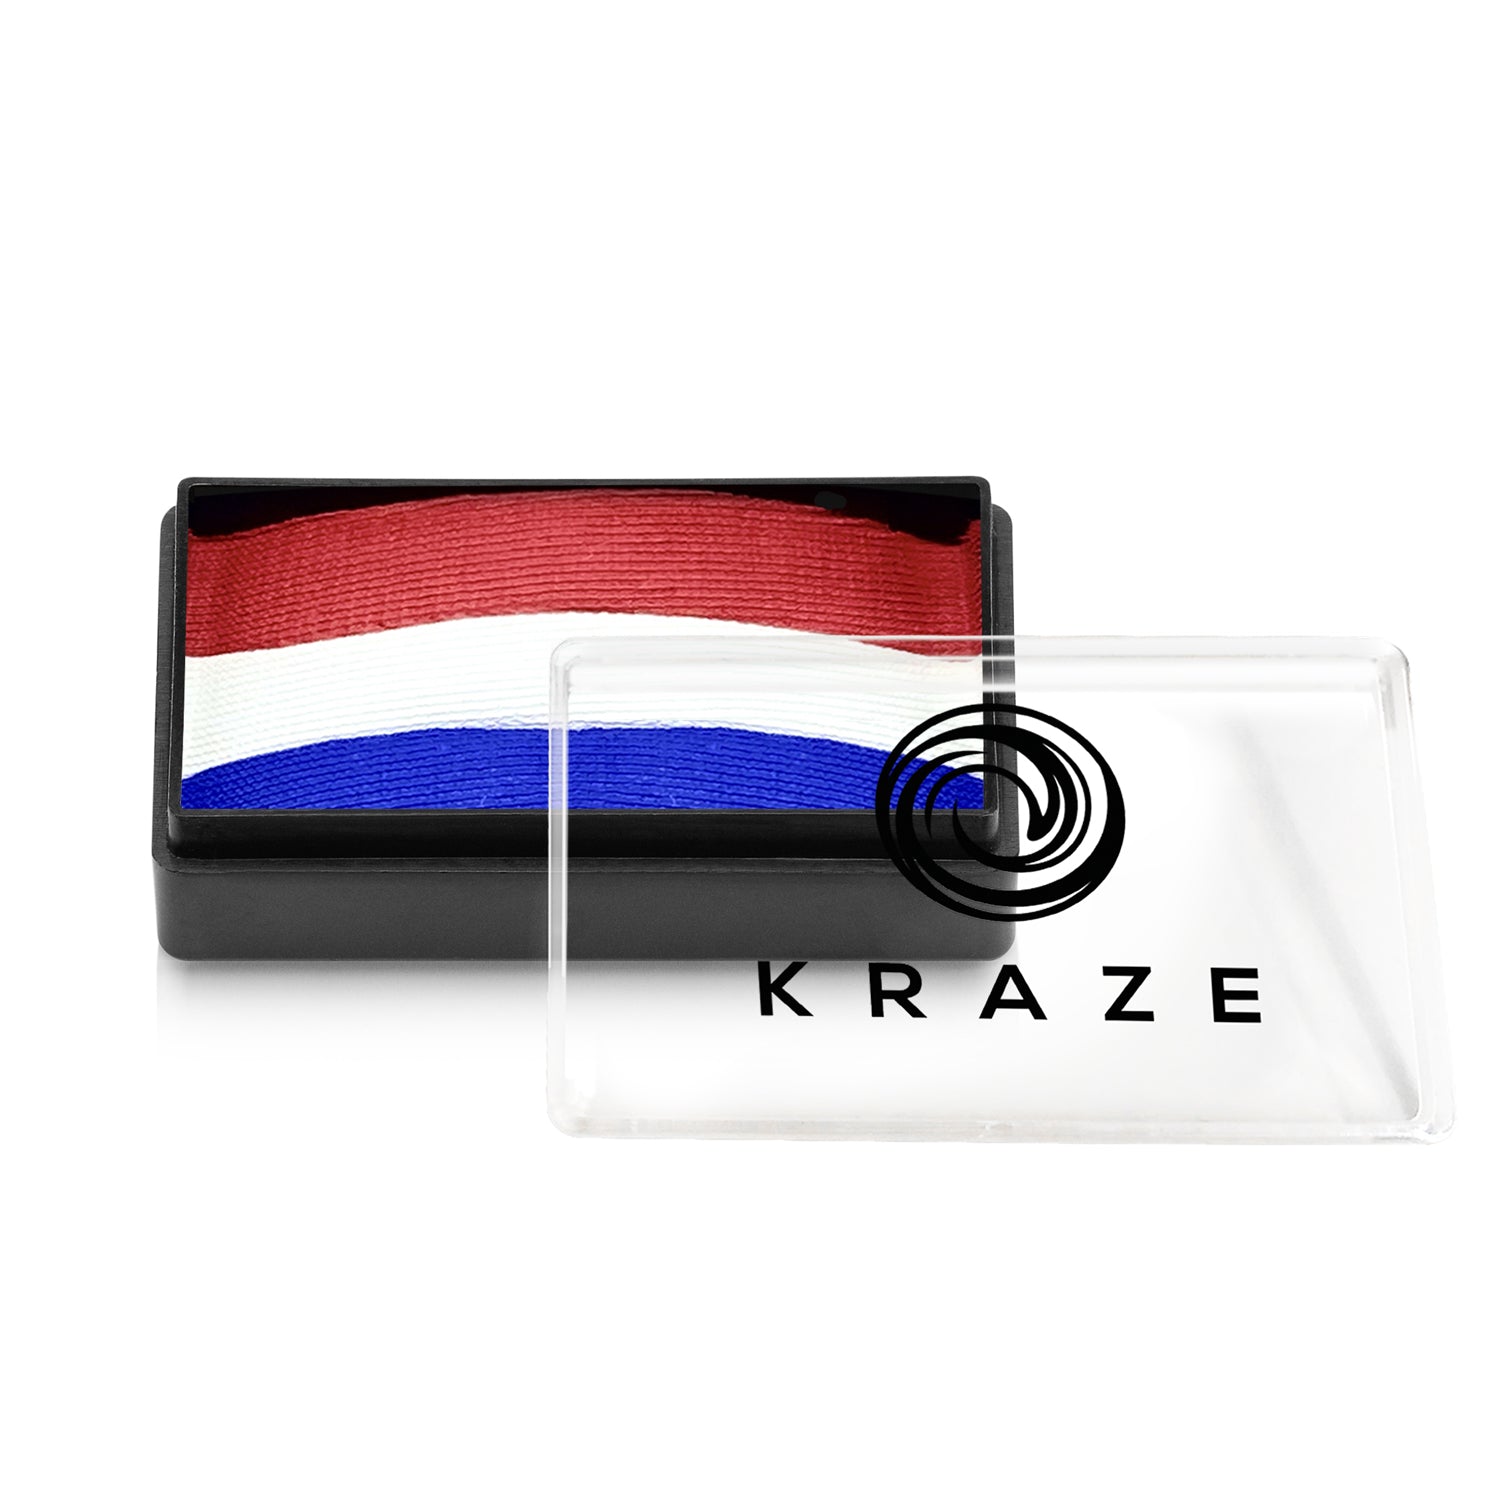 Kraze FX Domed One Stroke Cake - Anthem (25 gm)